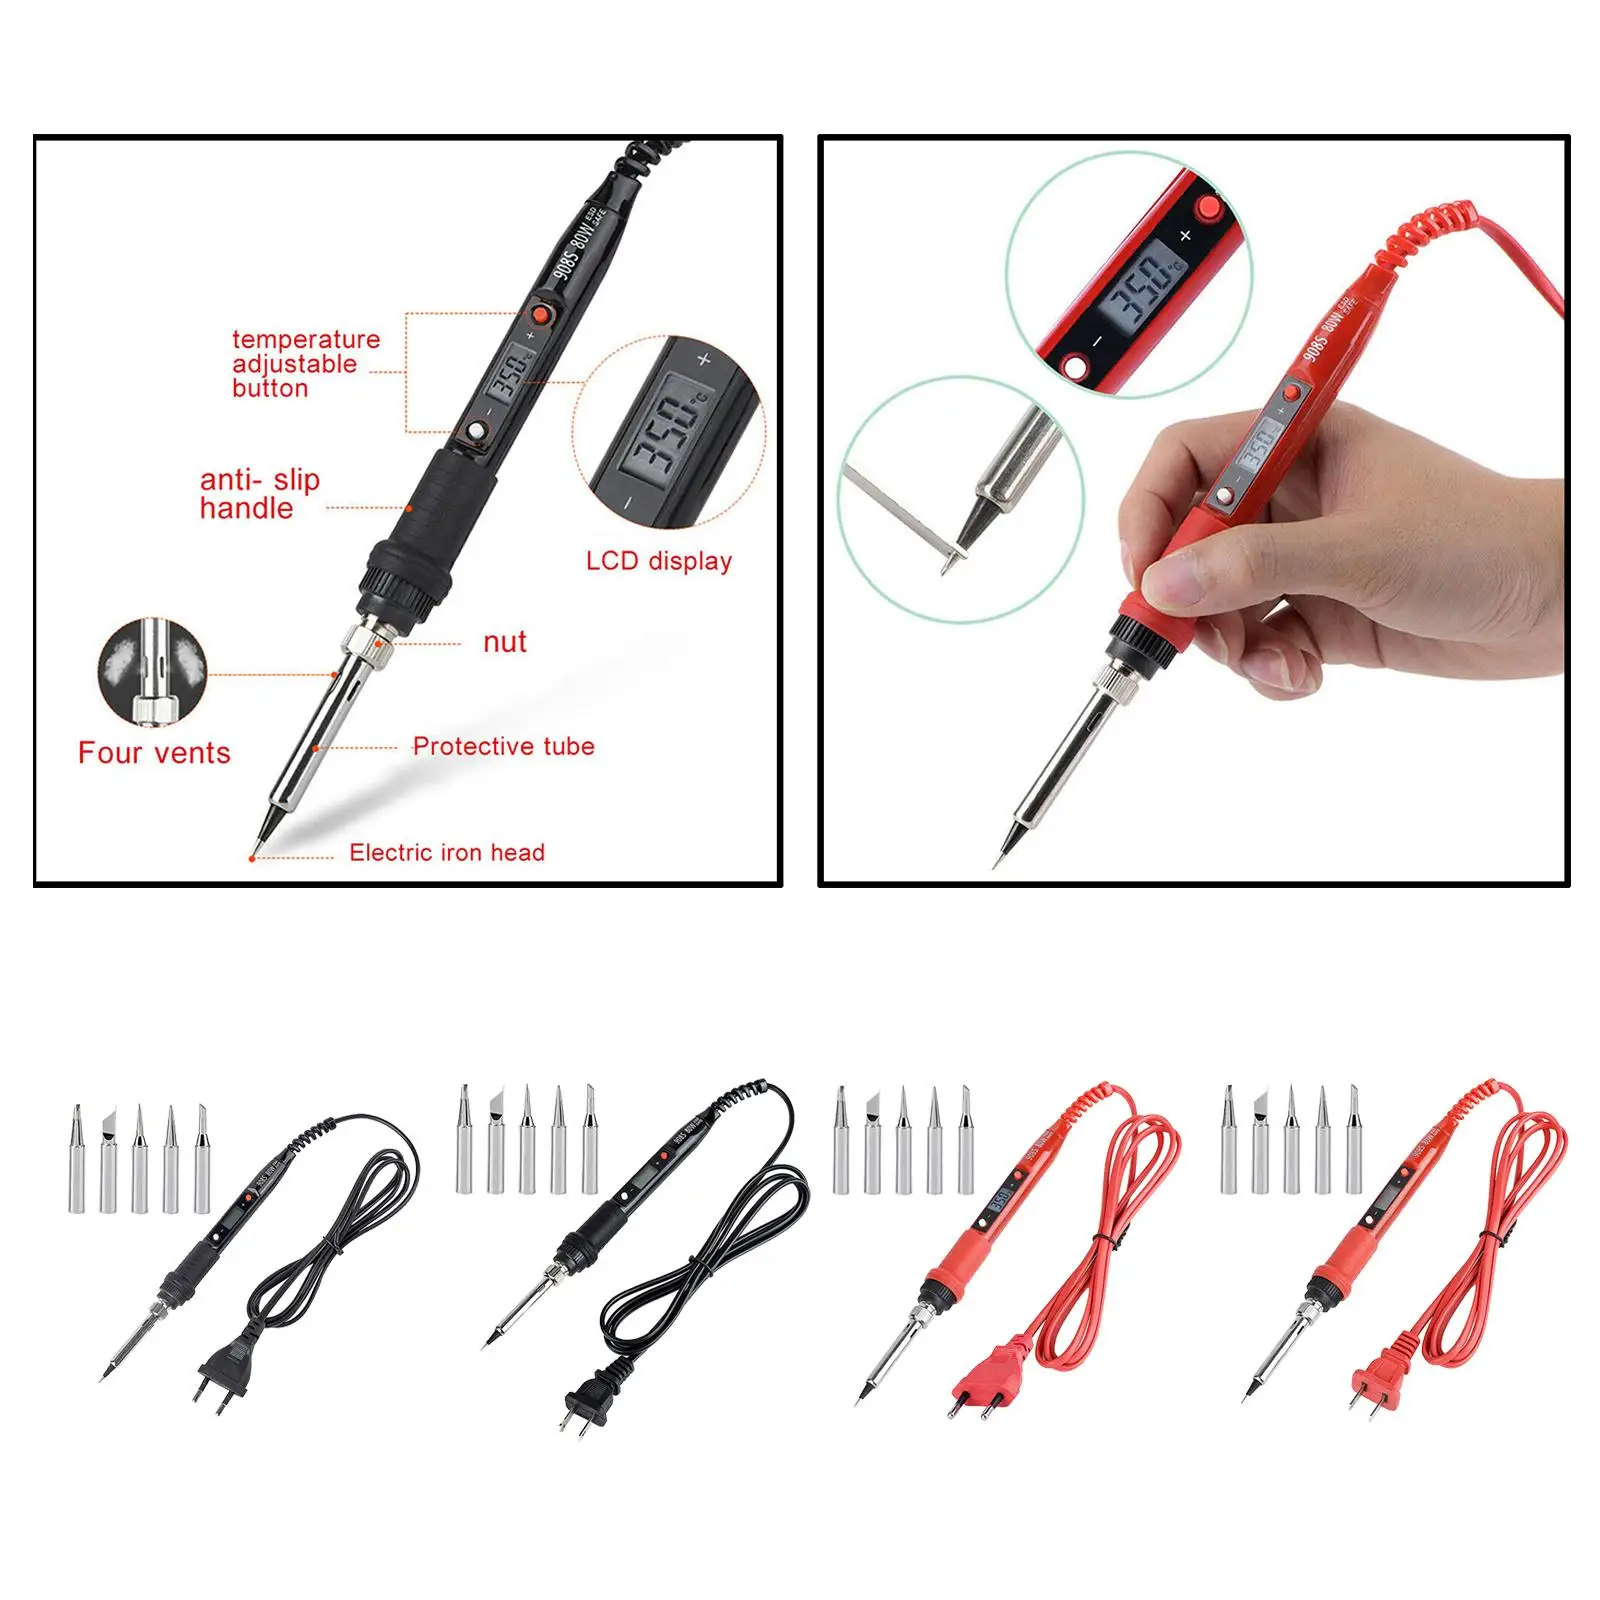 Electric Soldering Iron Kit with 5 Solder Tips Digital Solder Gun for DIY Hobby Projectsm Jewelry Repairing, EU Plug